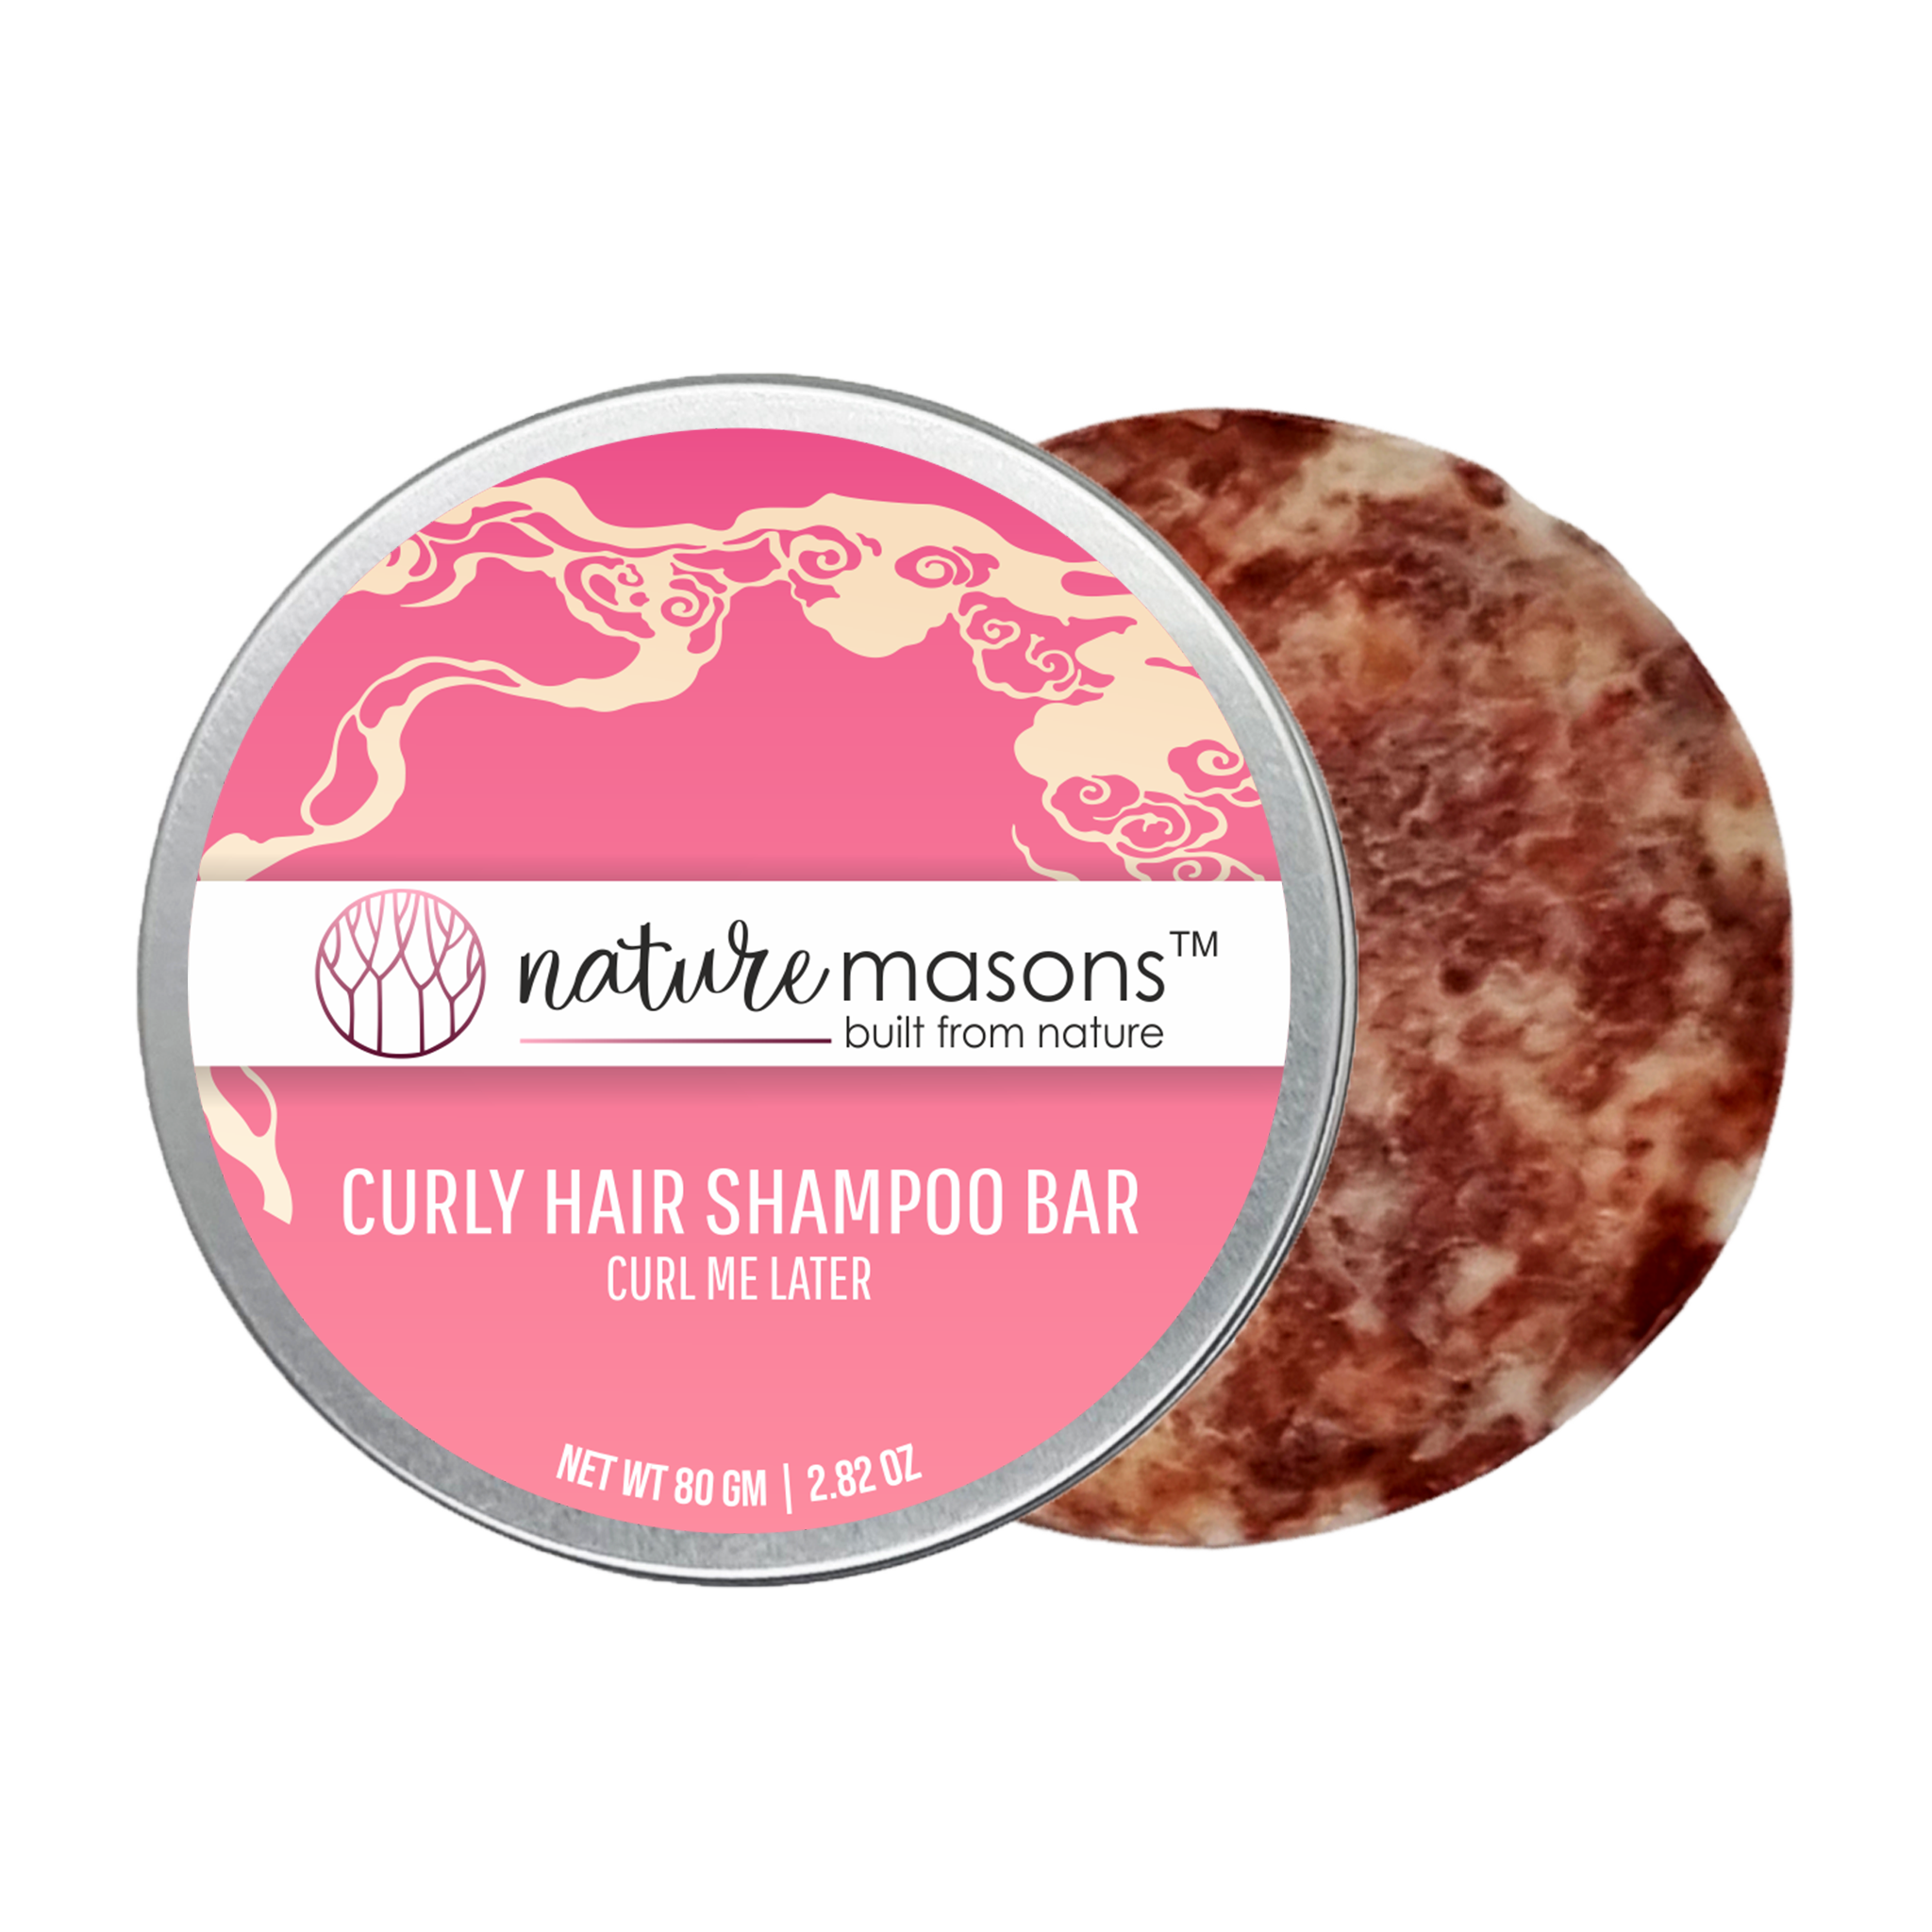 Best Dry Shampoo Bar For Hair in India  Earth Rhythm